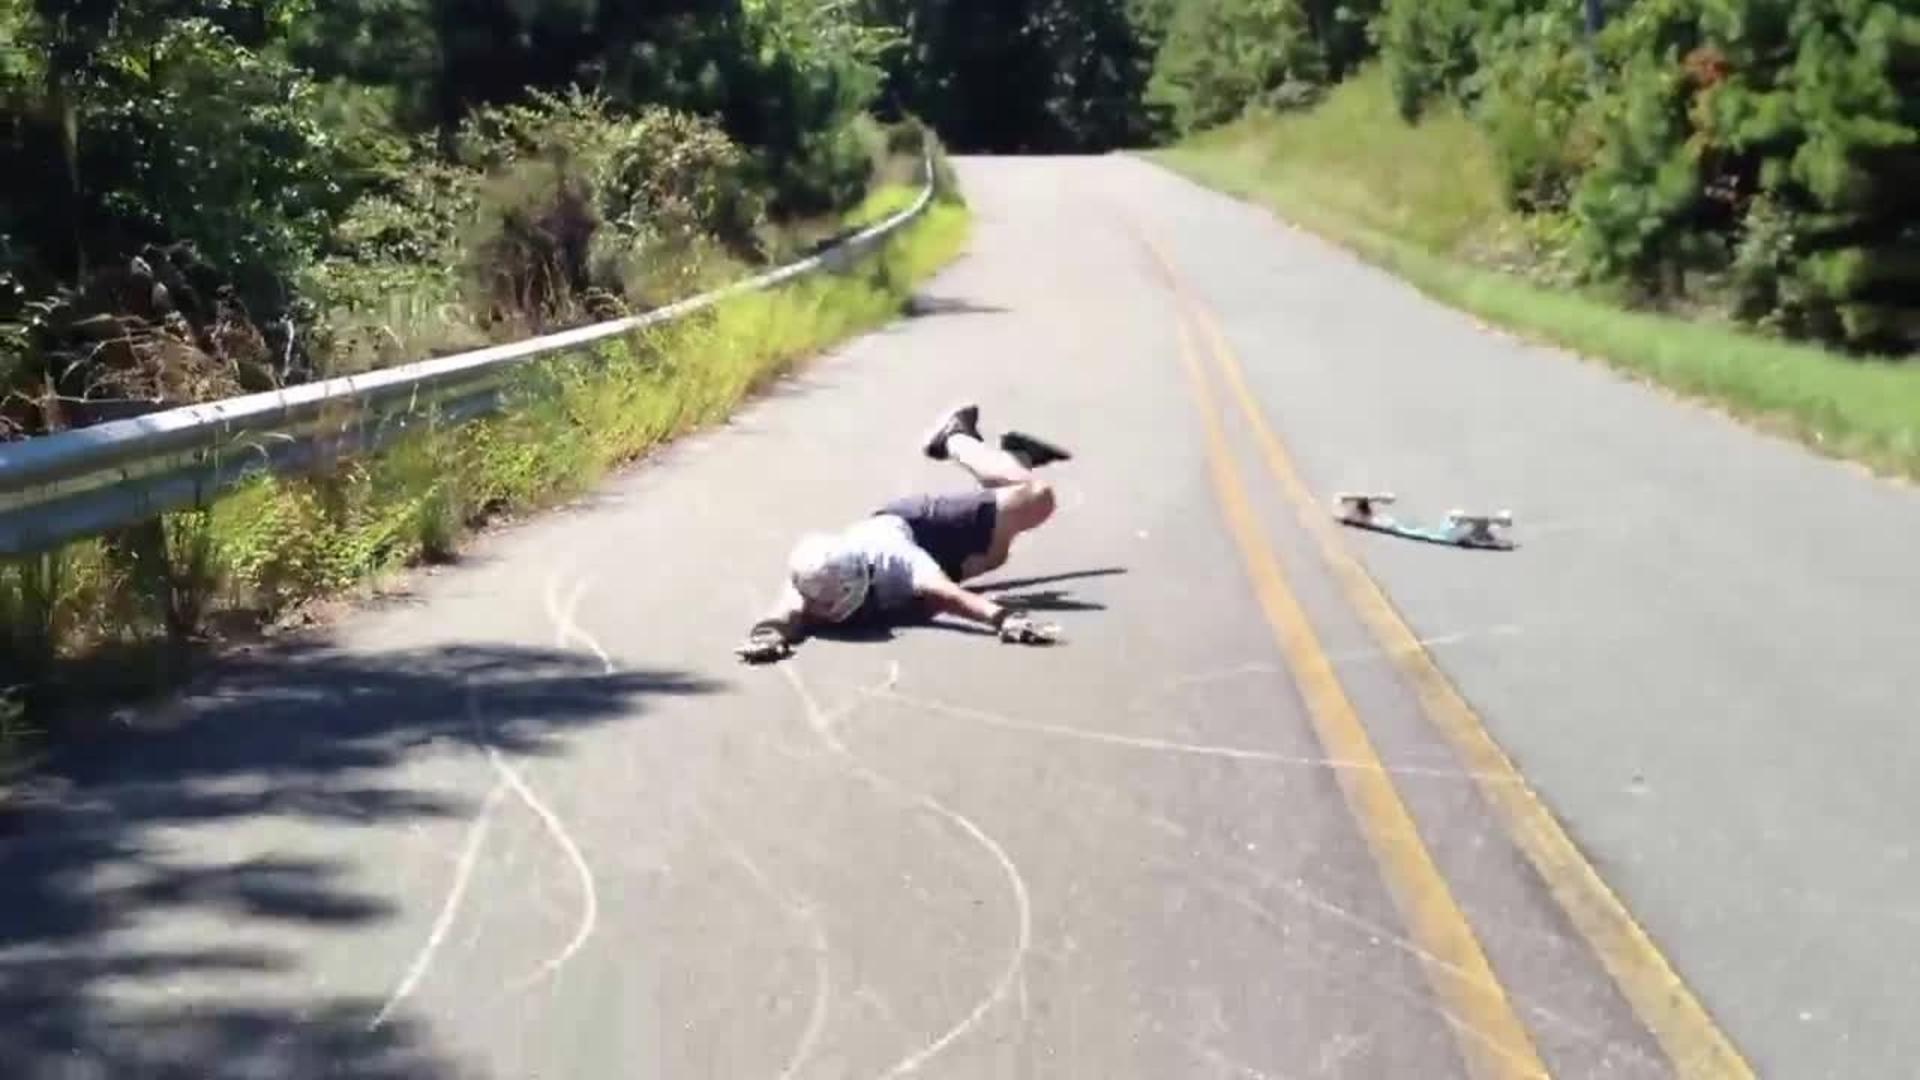 Red Shirt Guy's Funny Downhill Longboard Fail